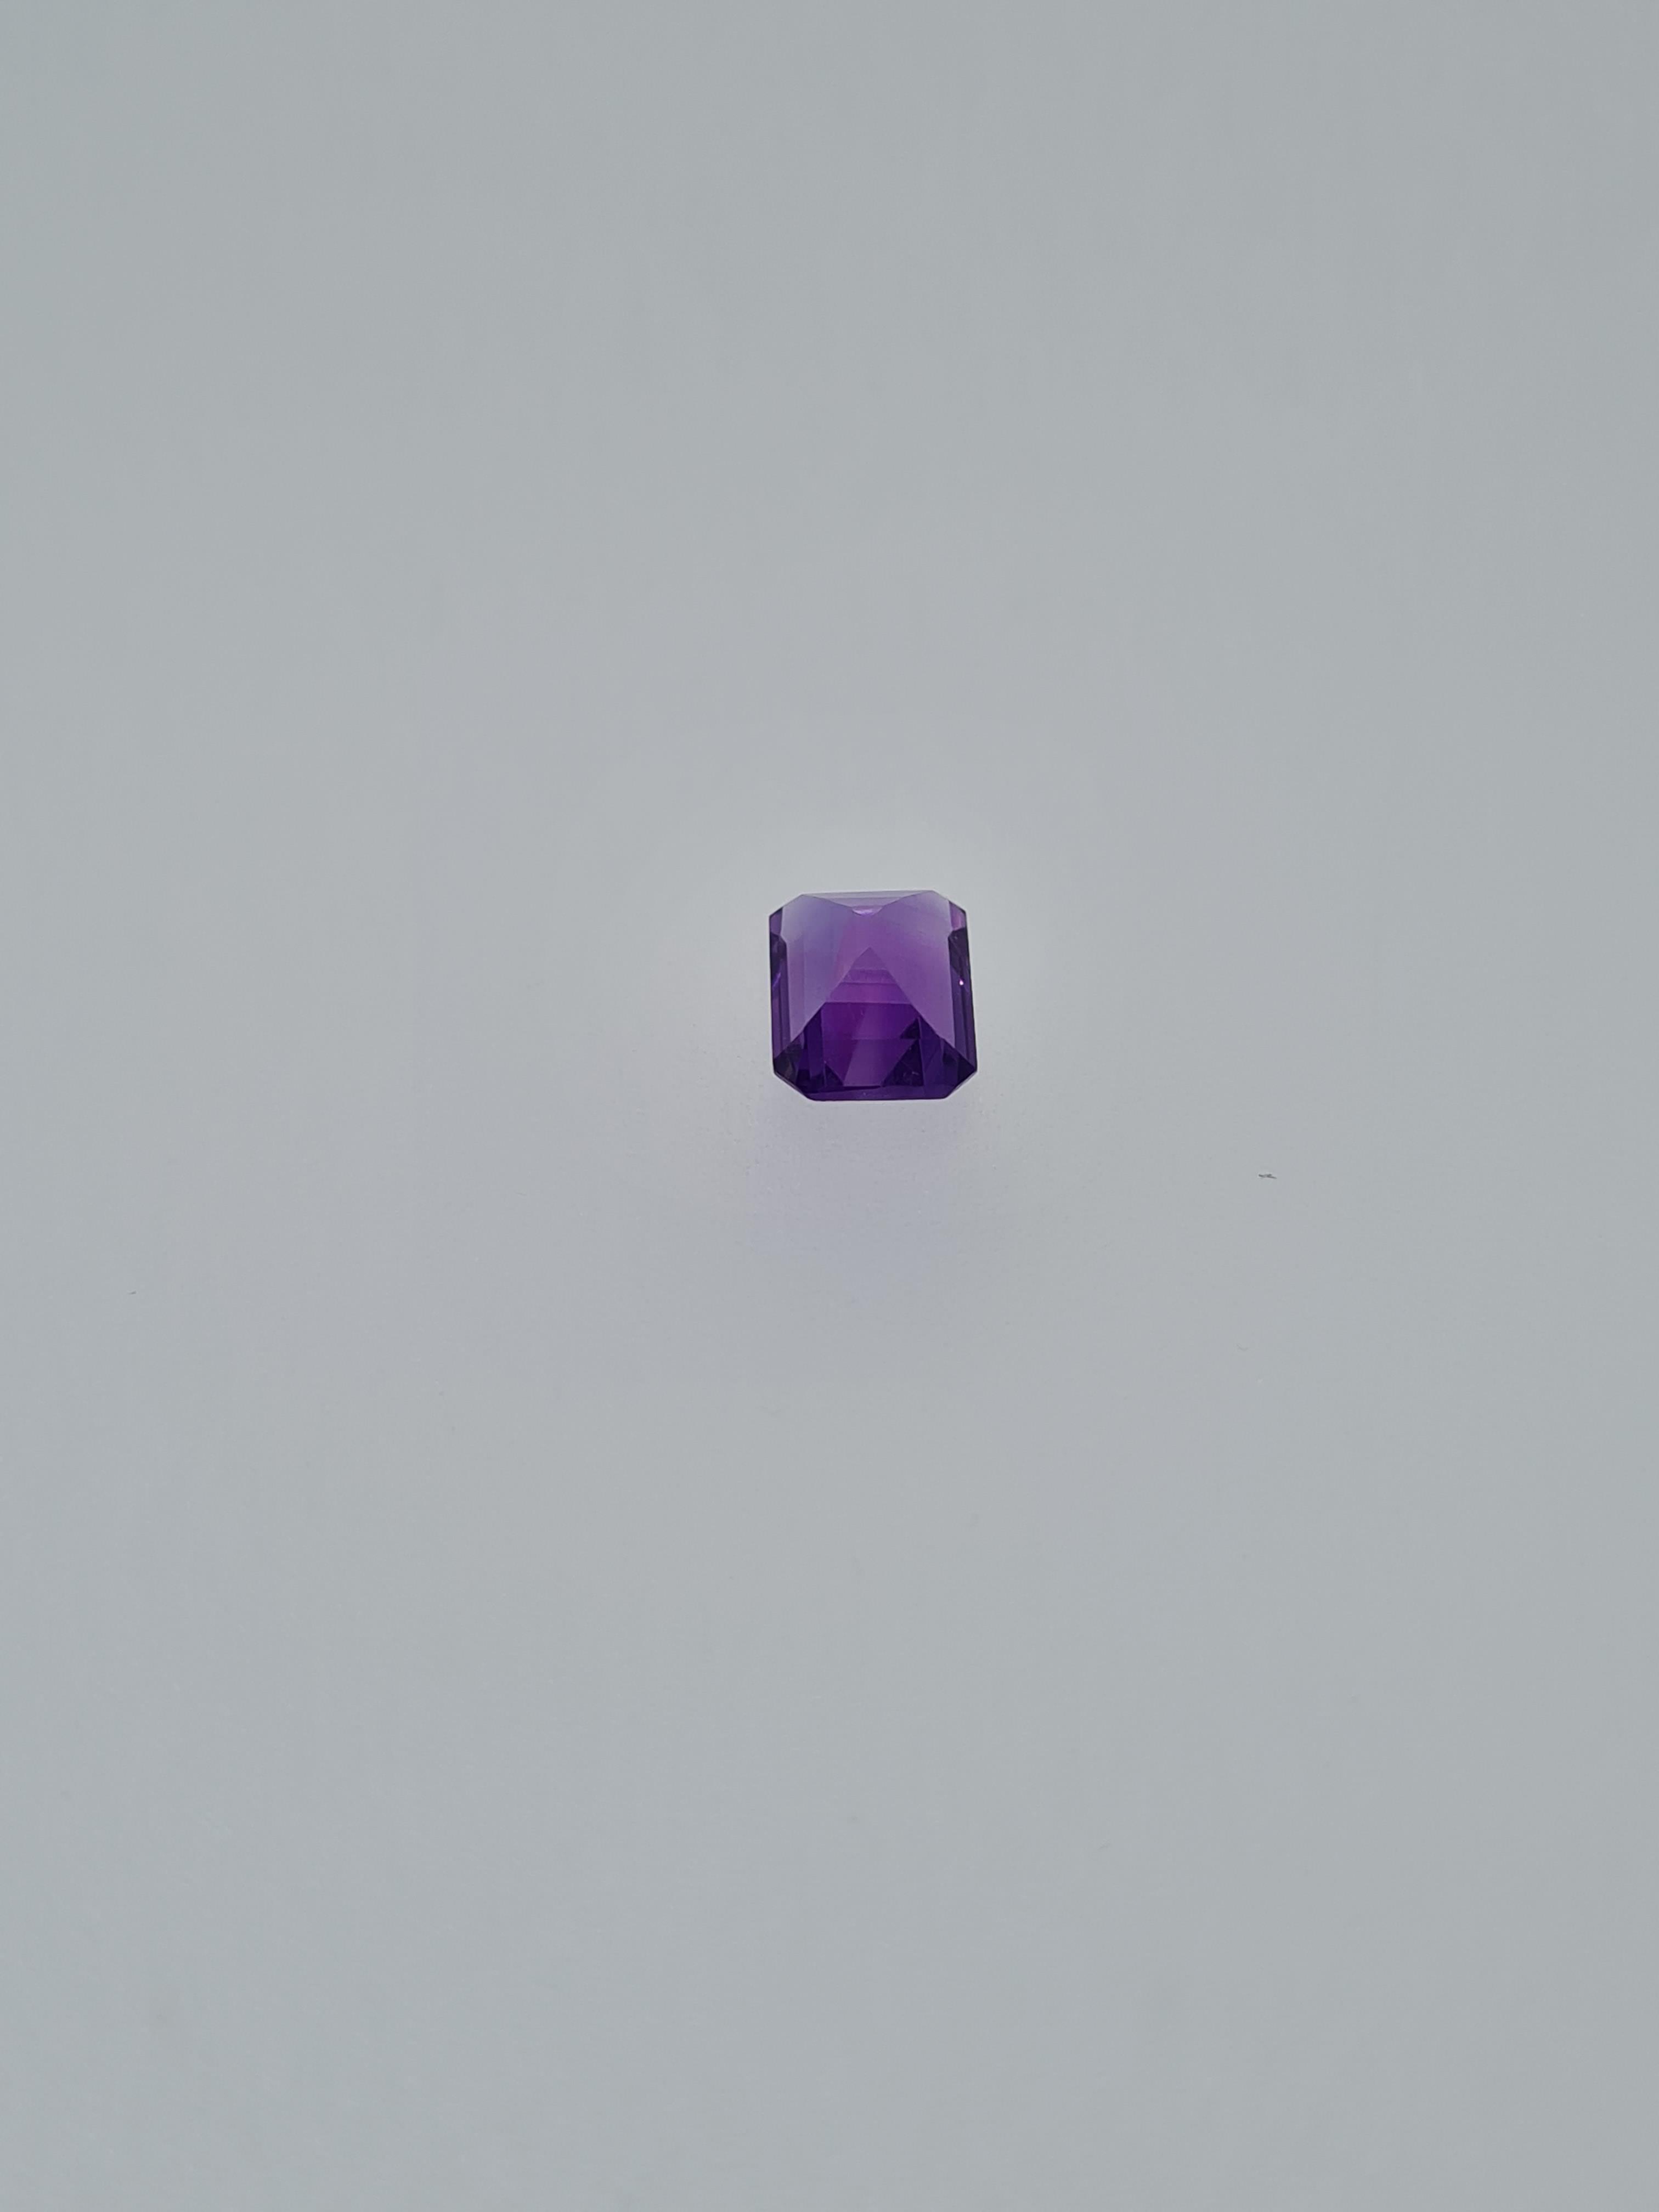 Amethyst rectangle step cut gem stone - Image 2 of 4